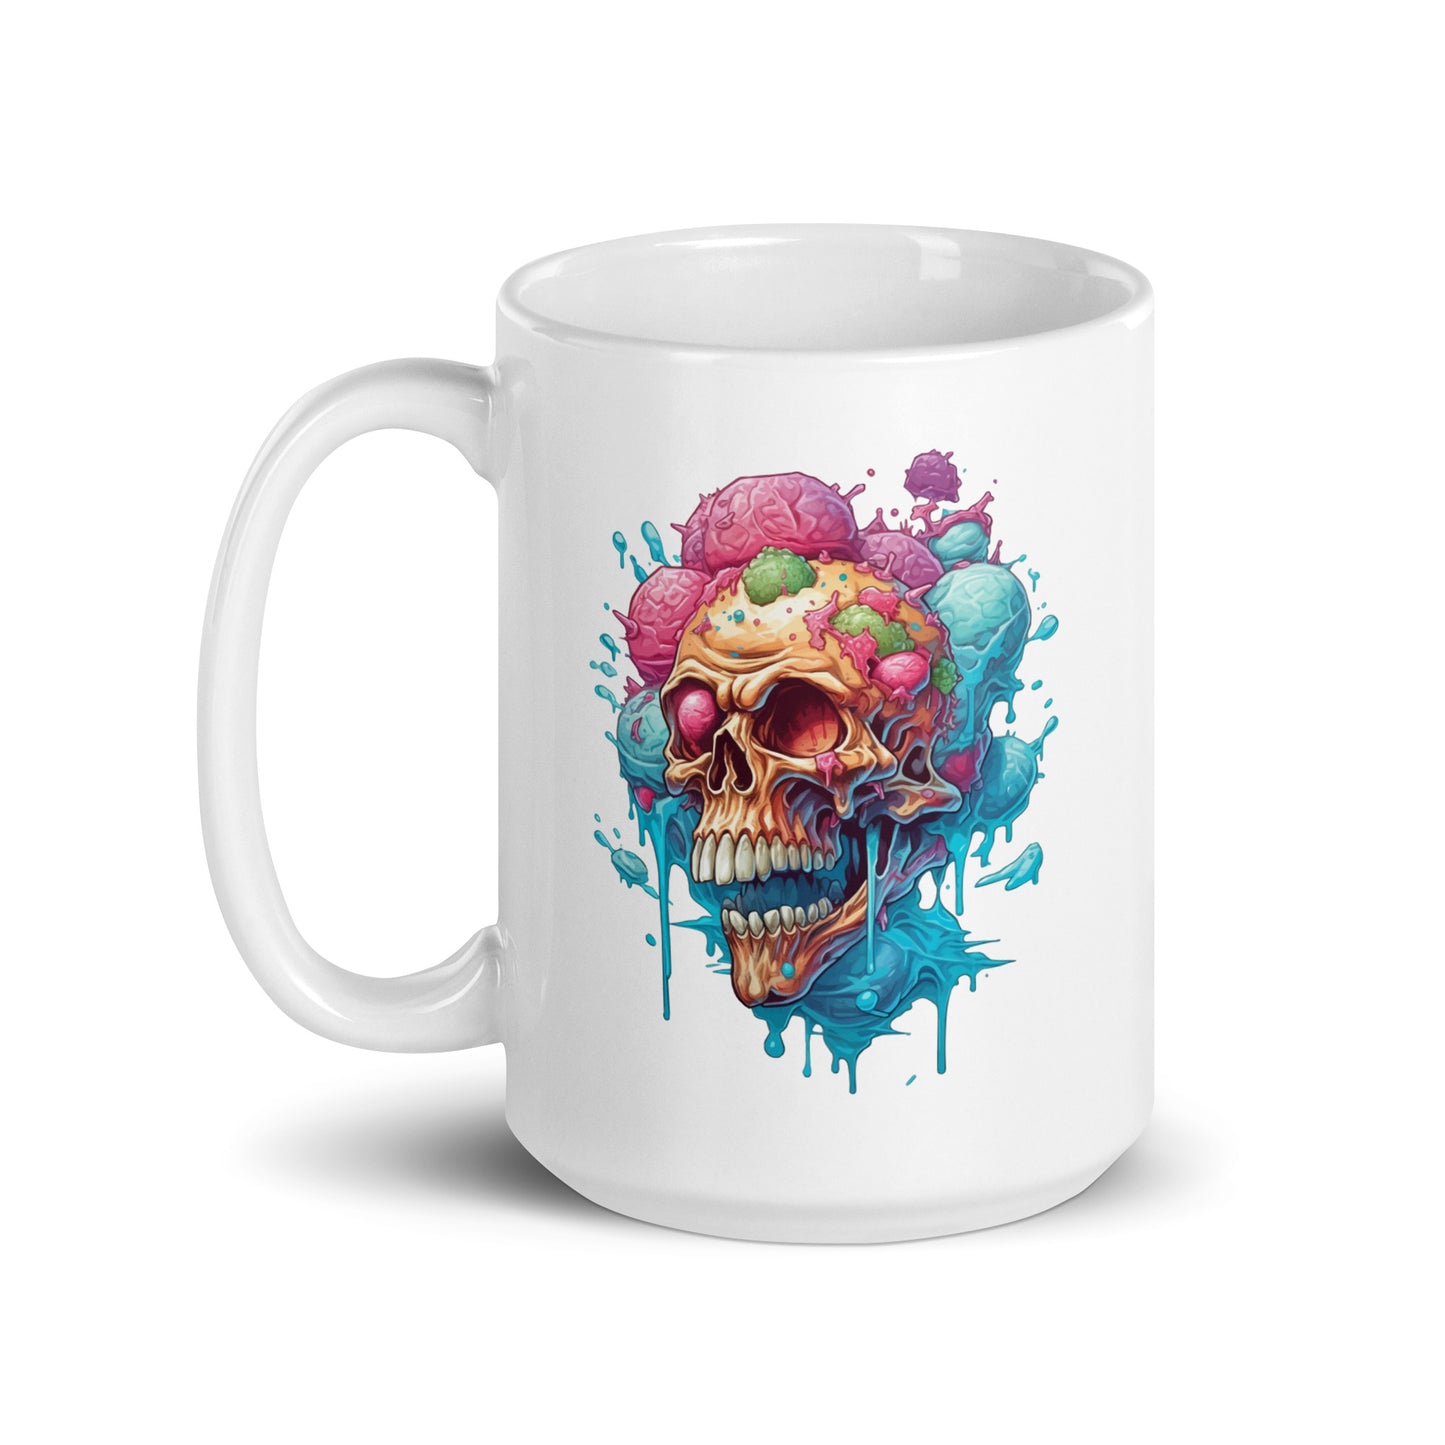 Ice cream skull, Head bones with purple and blue candies, Pop Art style illustration, Cartoon skull with crazy dripping ice cream - White glossy mug